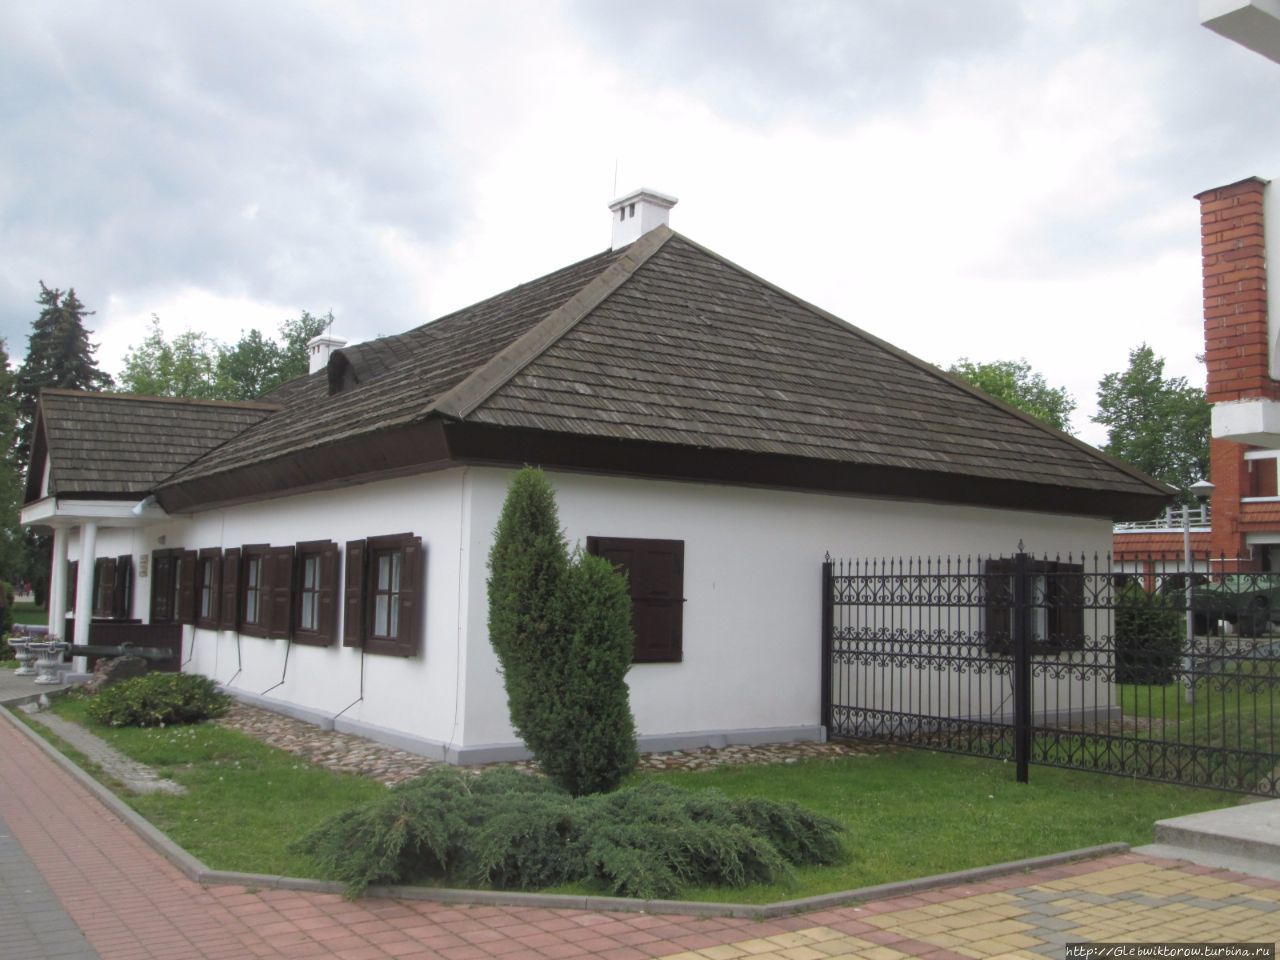 Музей Суворова А.В. Кобрин, Беларусь